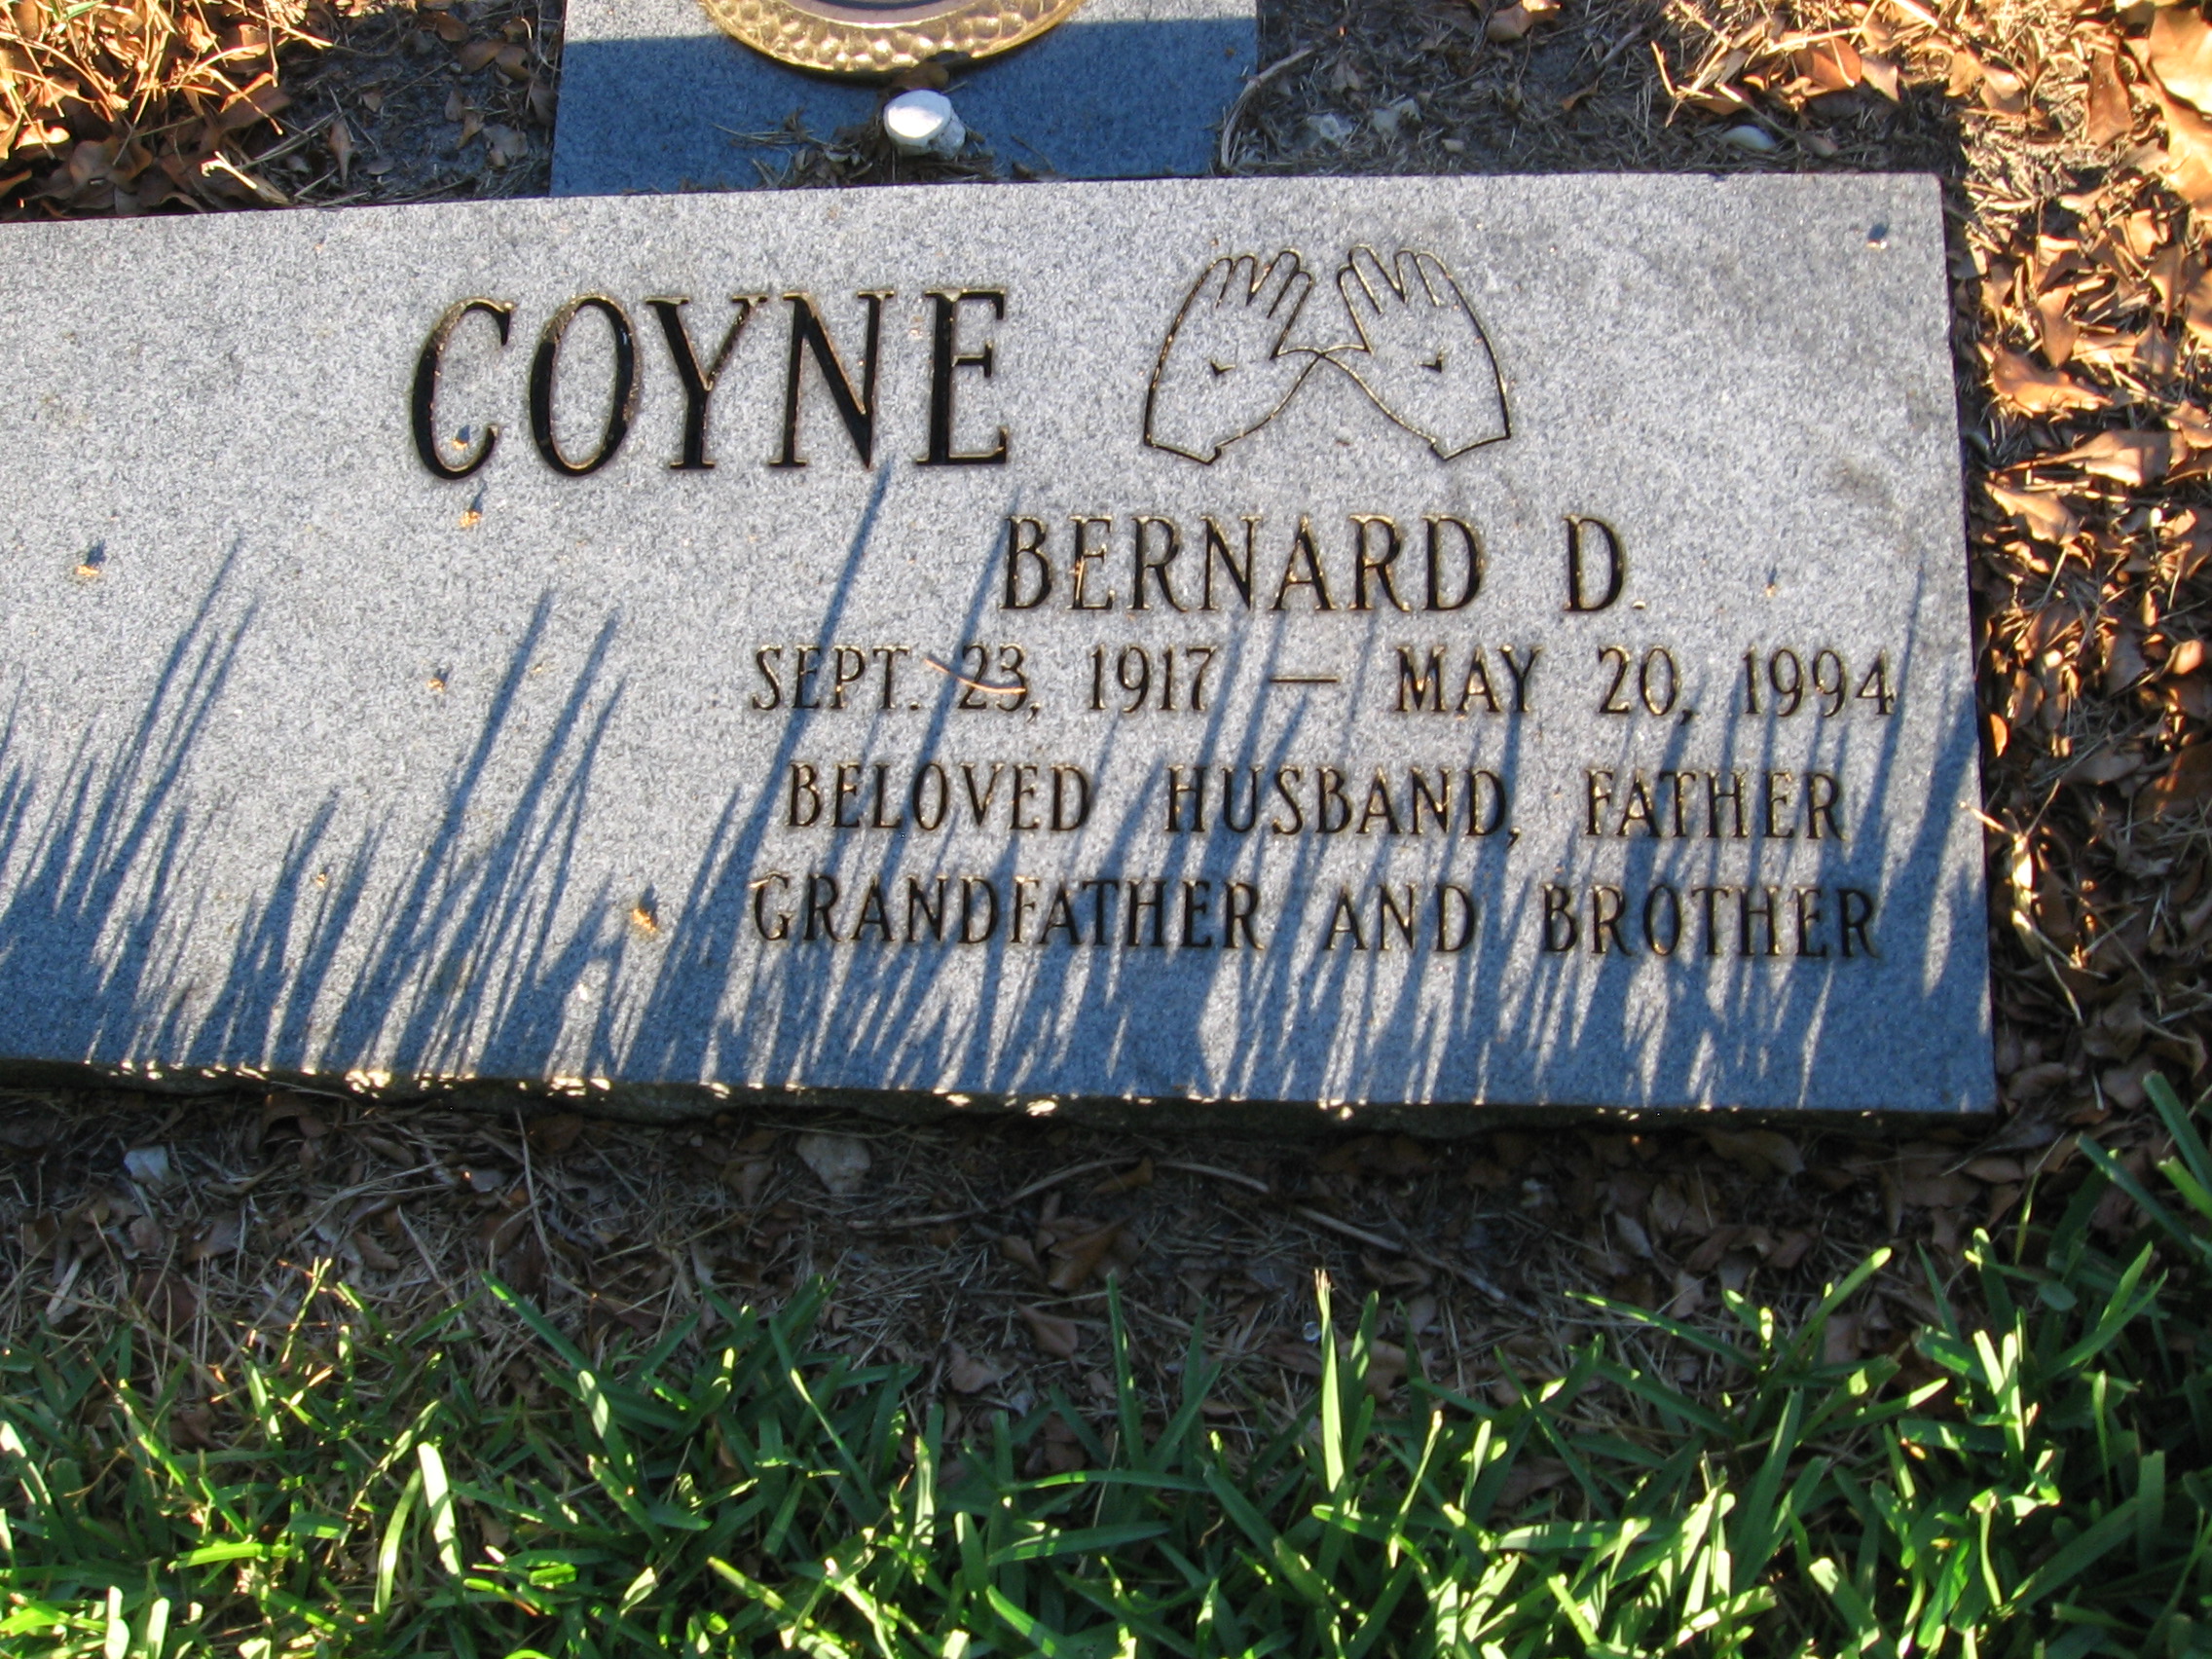 Bernard D Coyne